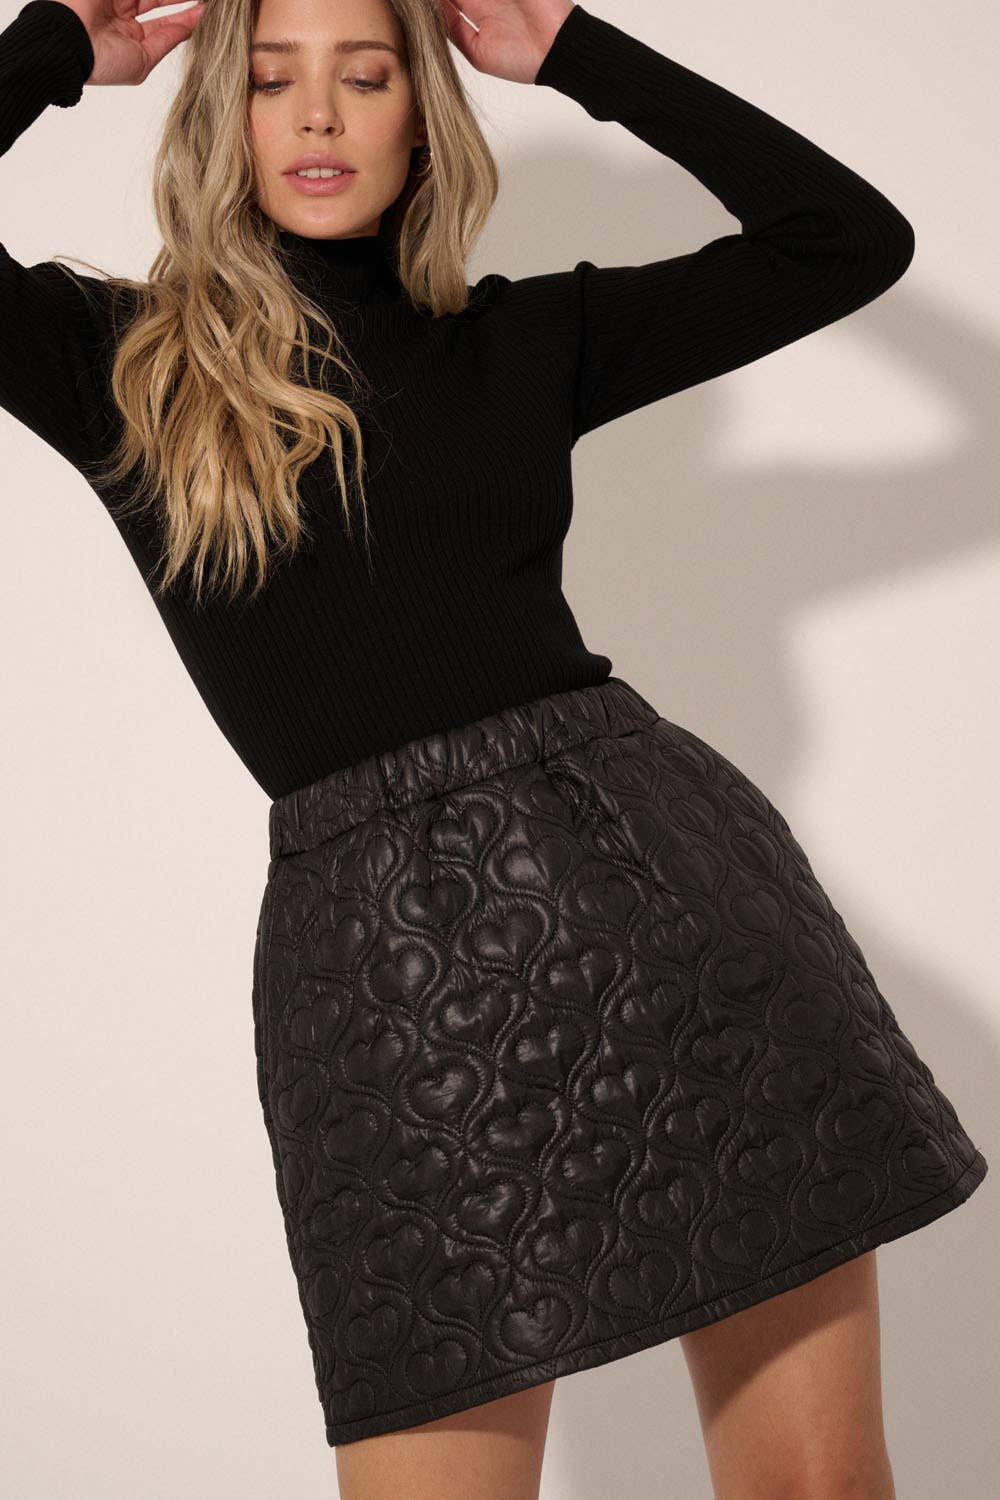 Faux Leather Heart Quilt High Waist Mini Skirt: L / BLACK